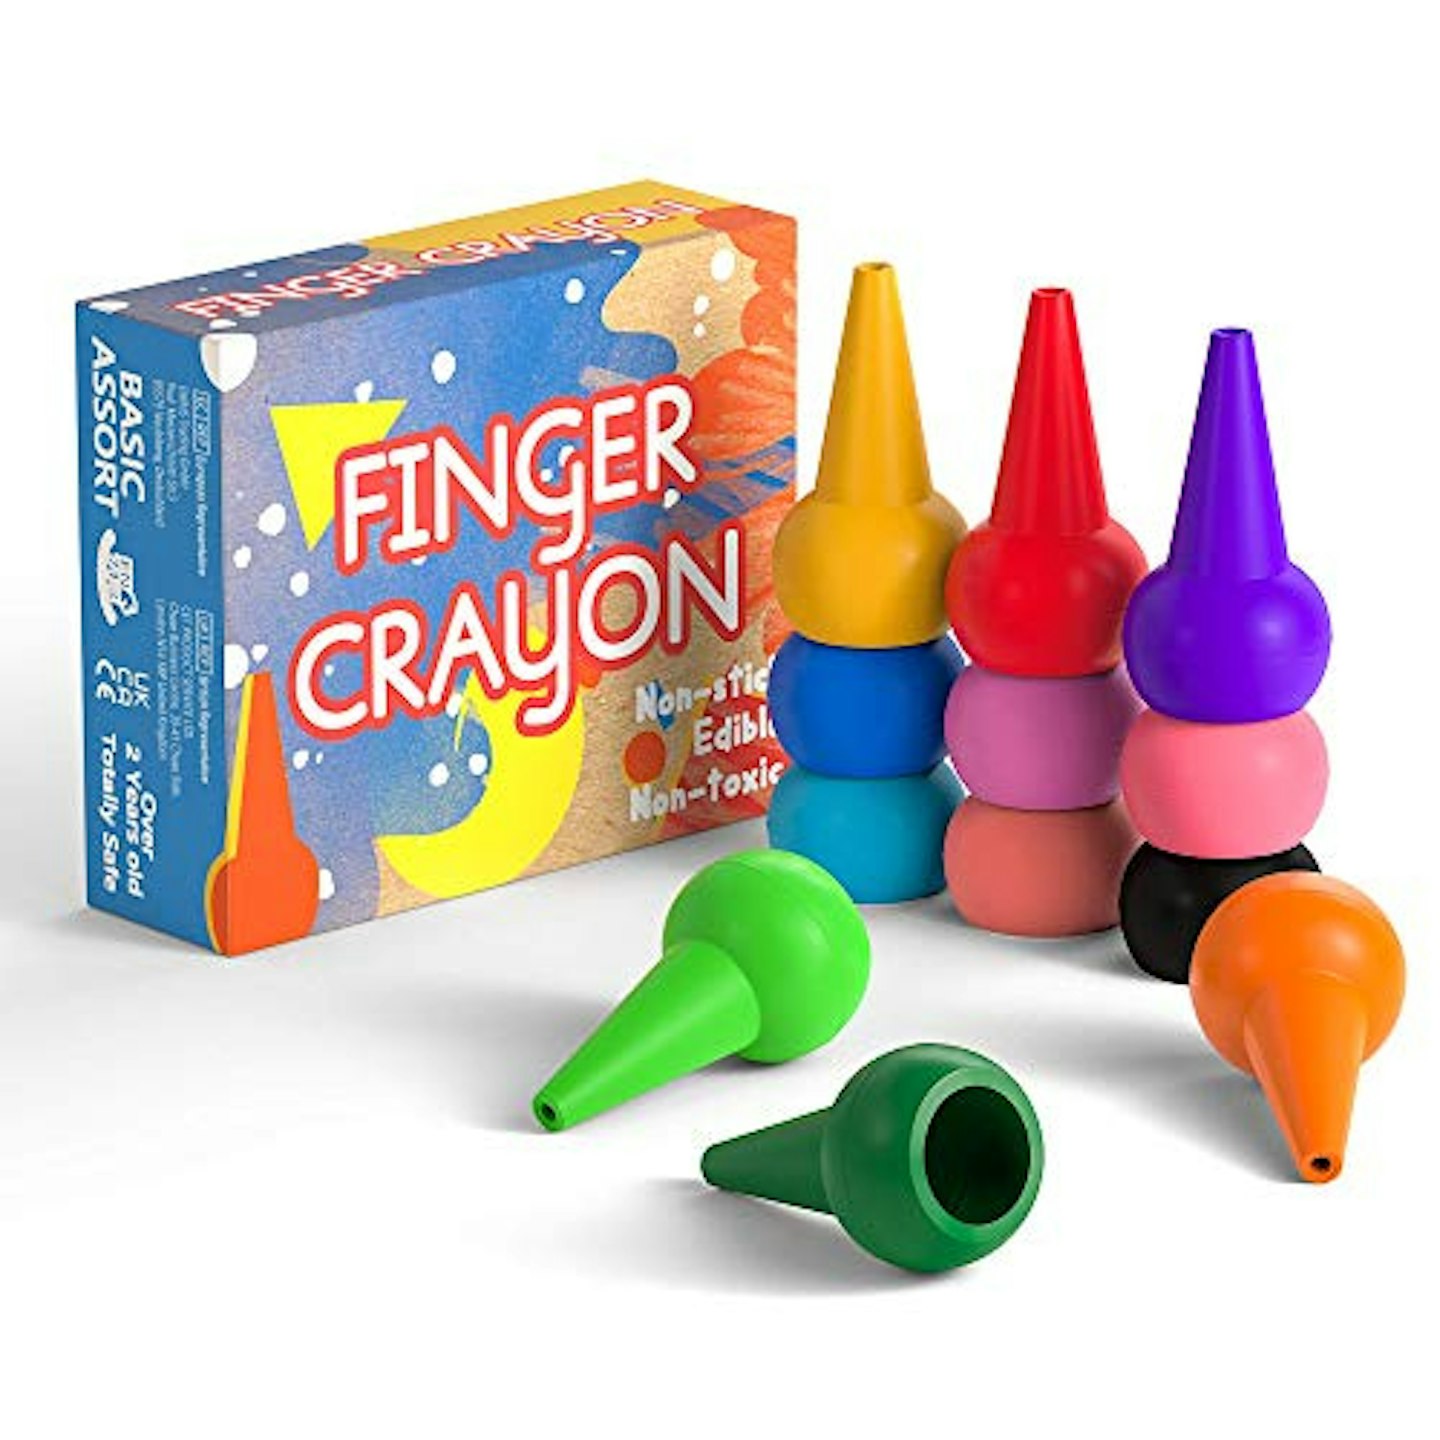 Palm-Grip Crayons